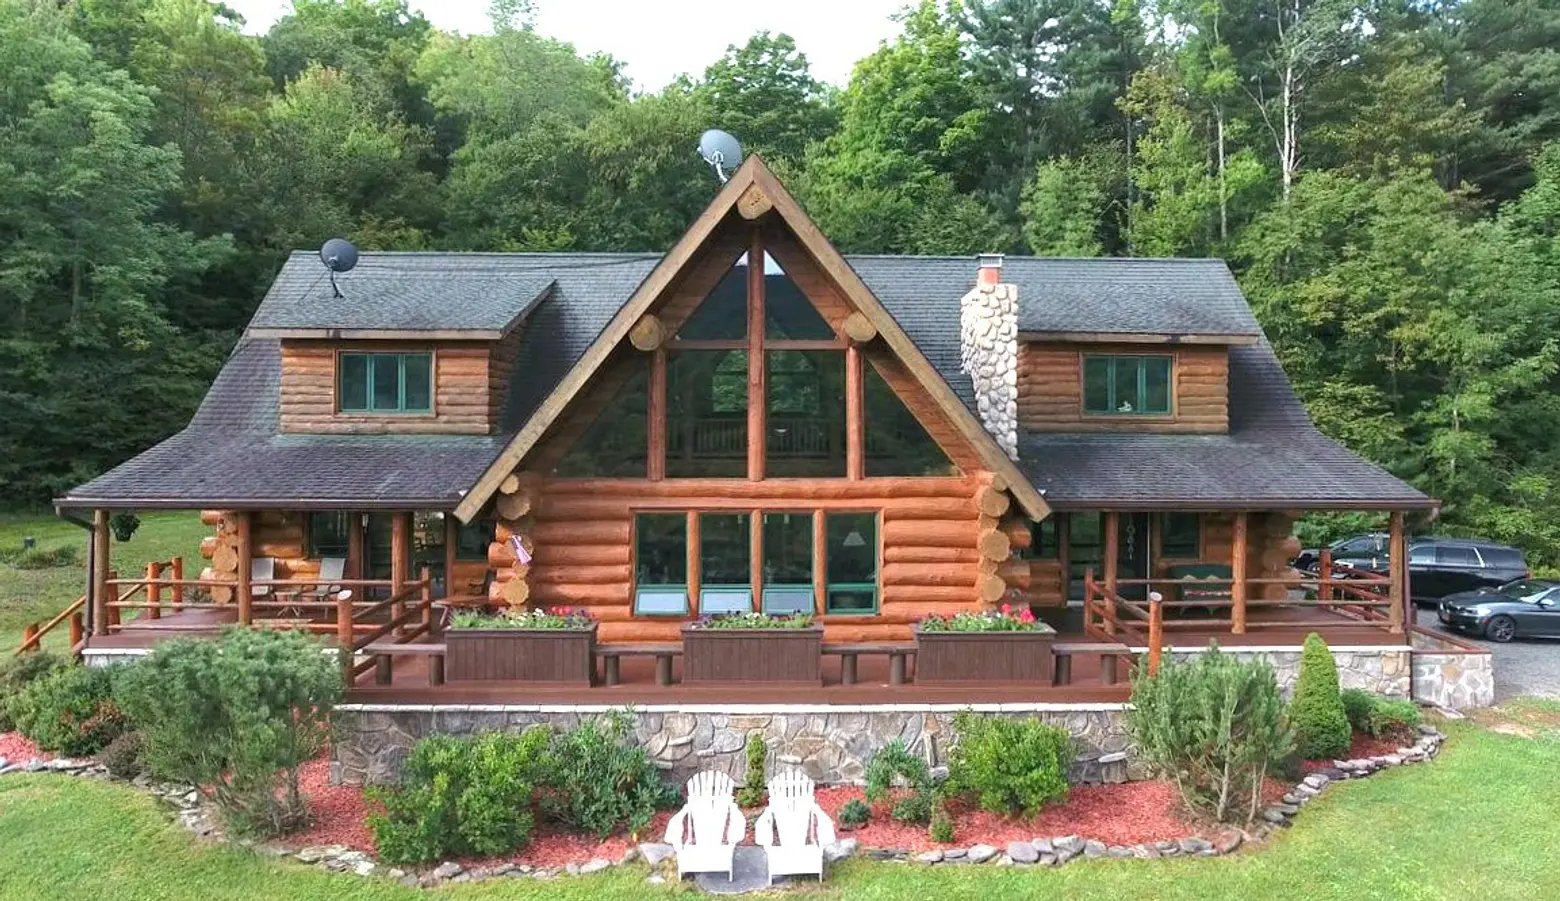 A bona fide log cabin on 18 acres in the Catskills asks $775K